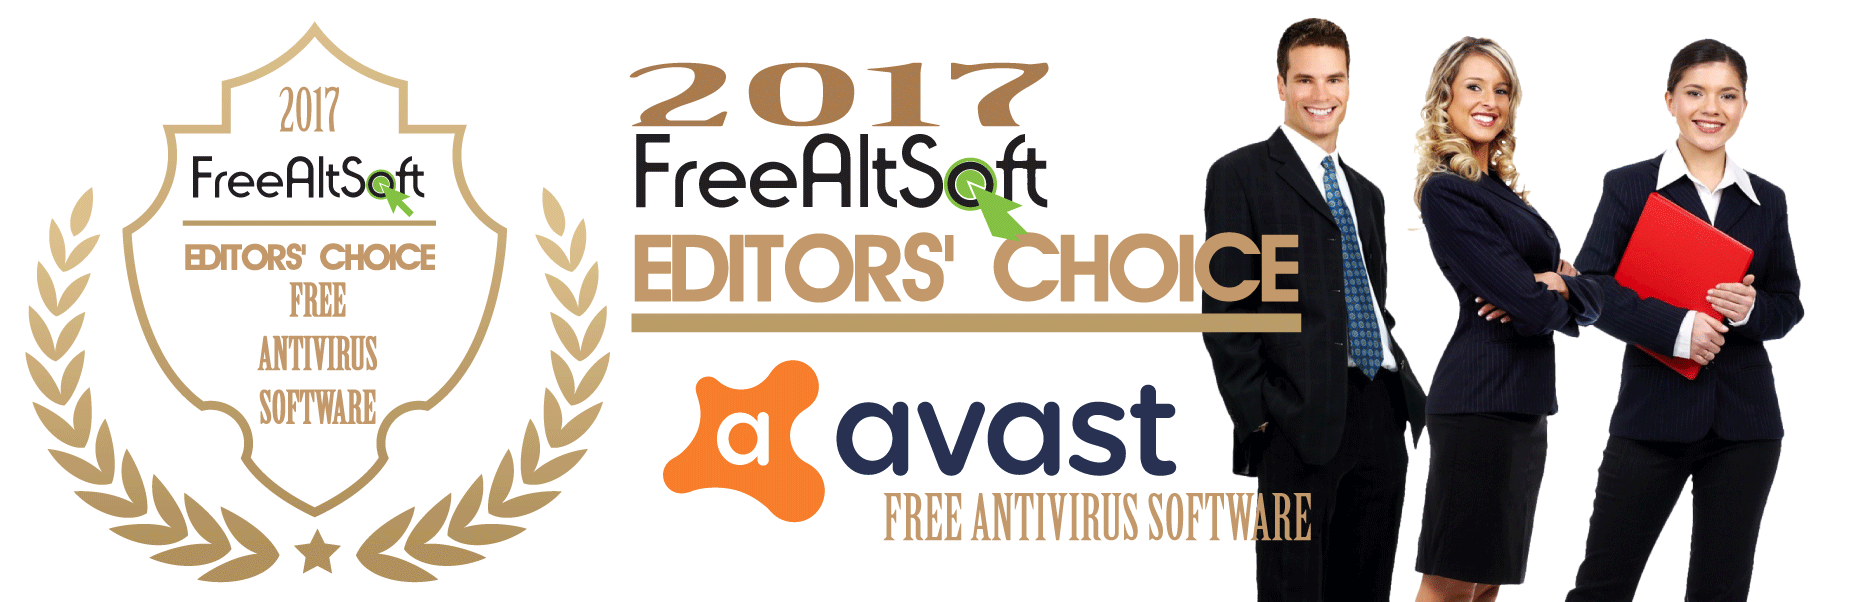 Best Free Antivirus For 2017